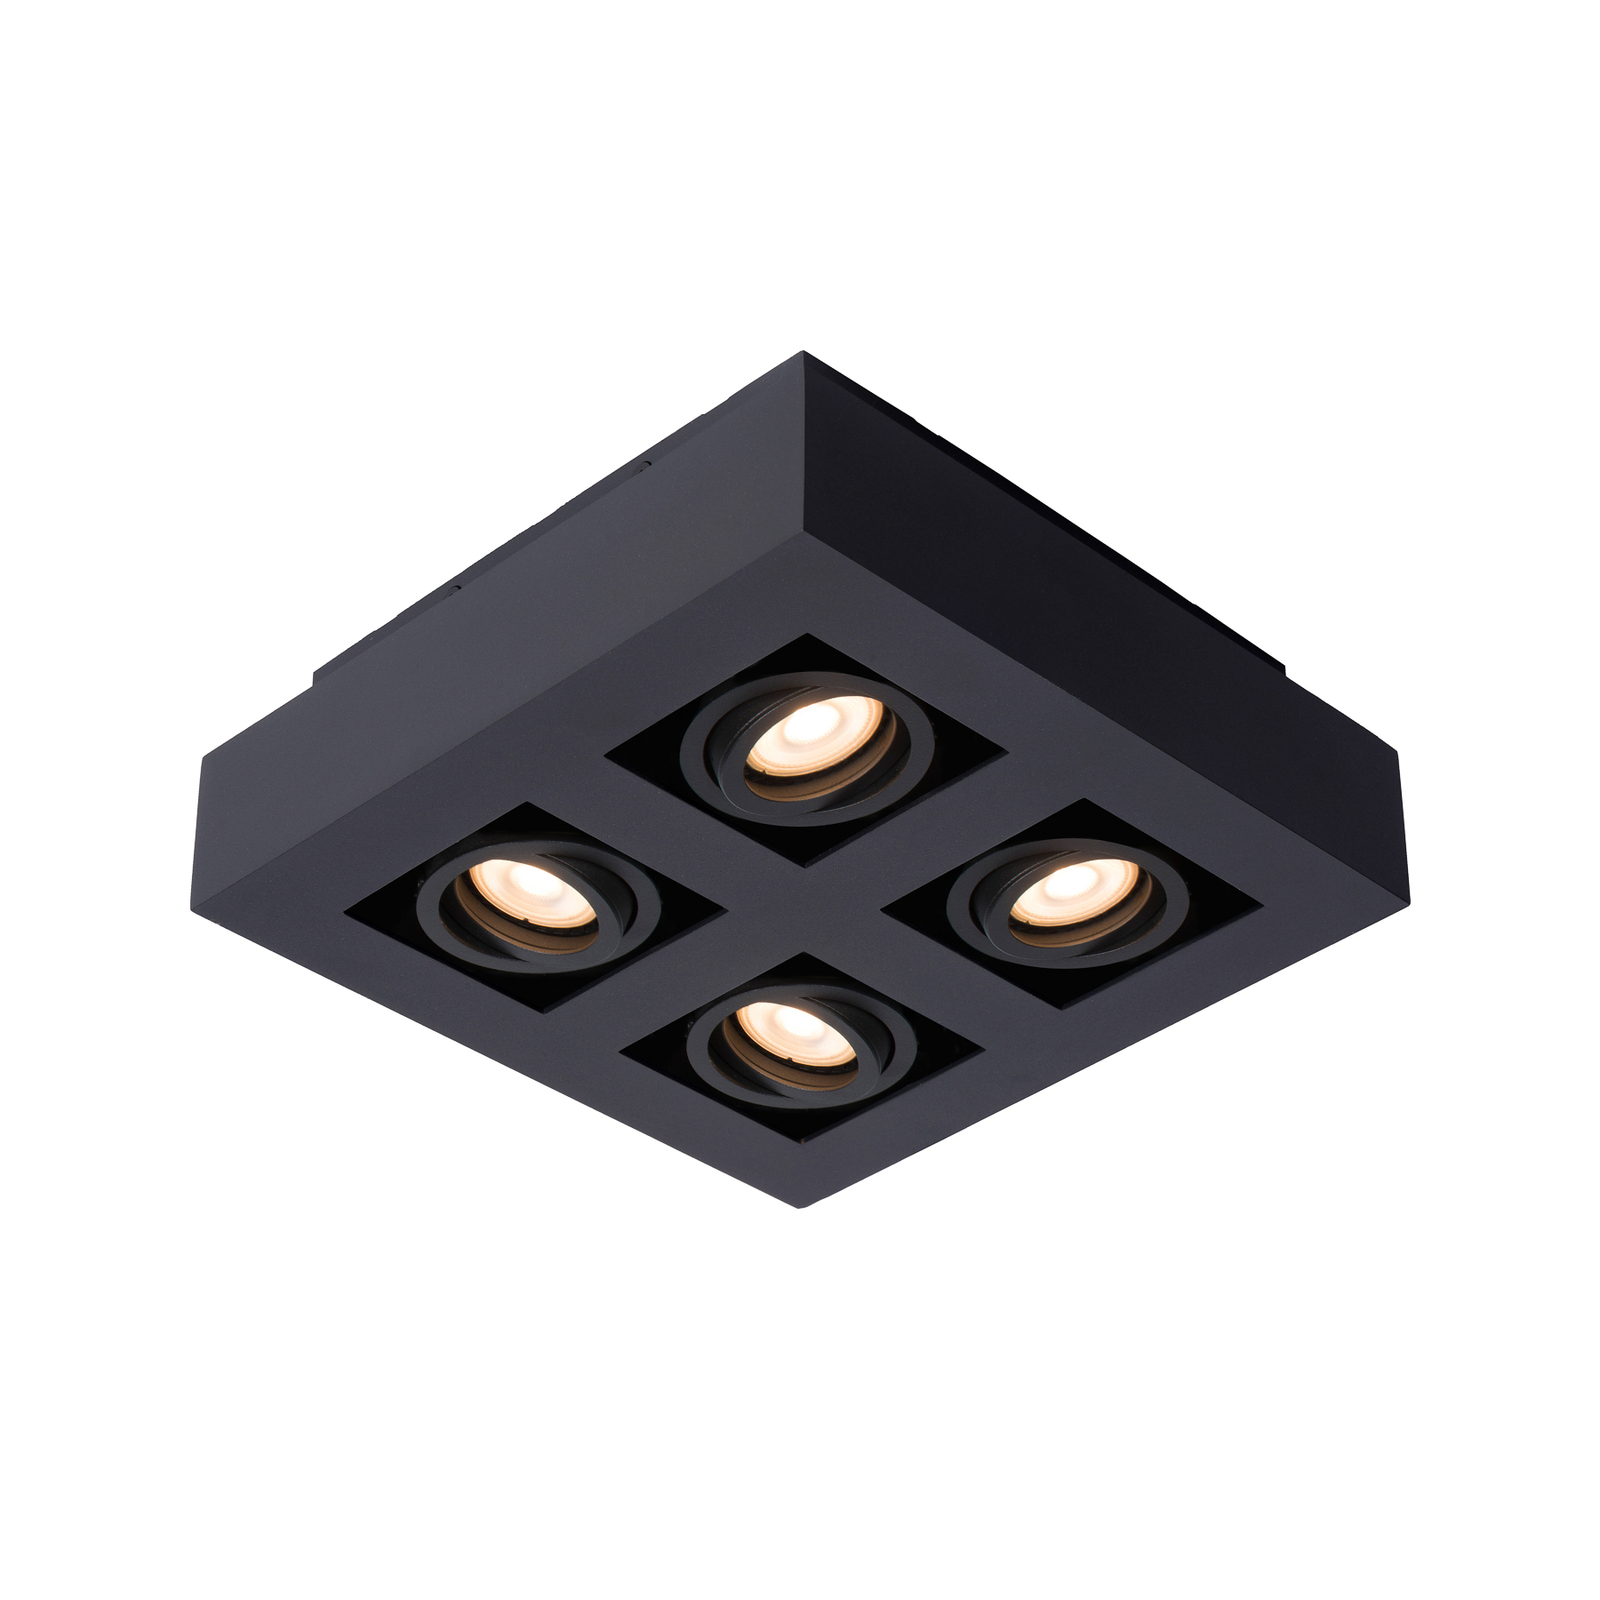 Projetor de teto Xirax, quatro luzes, preto